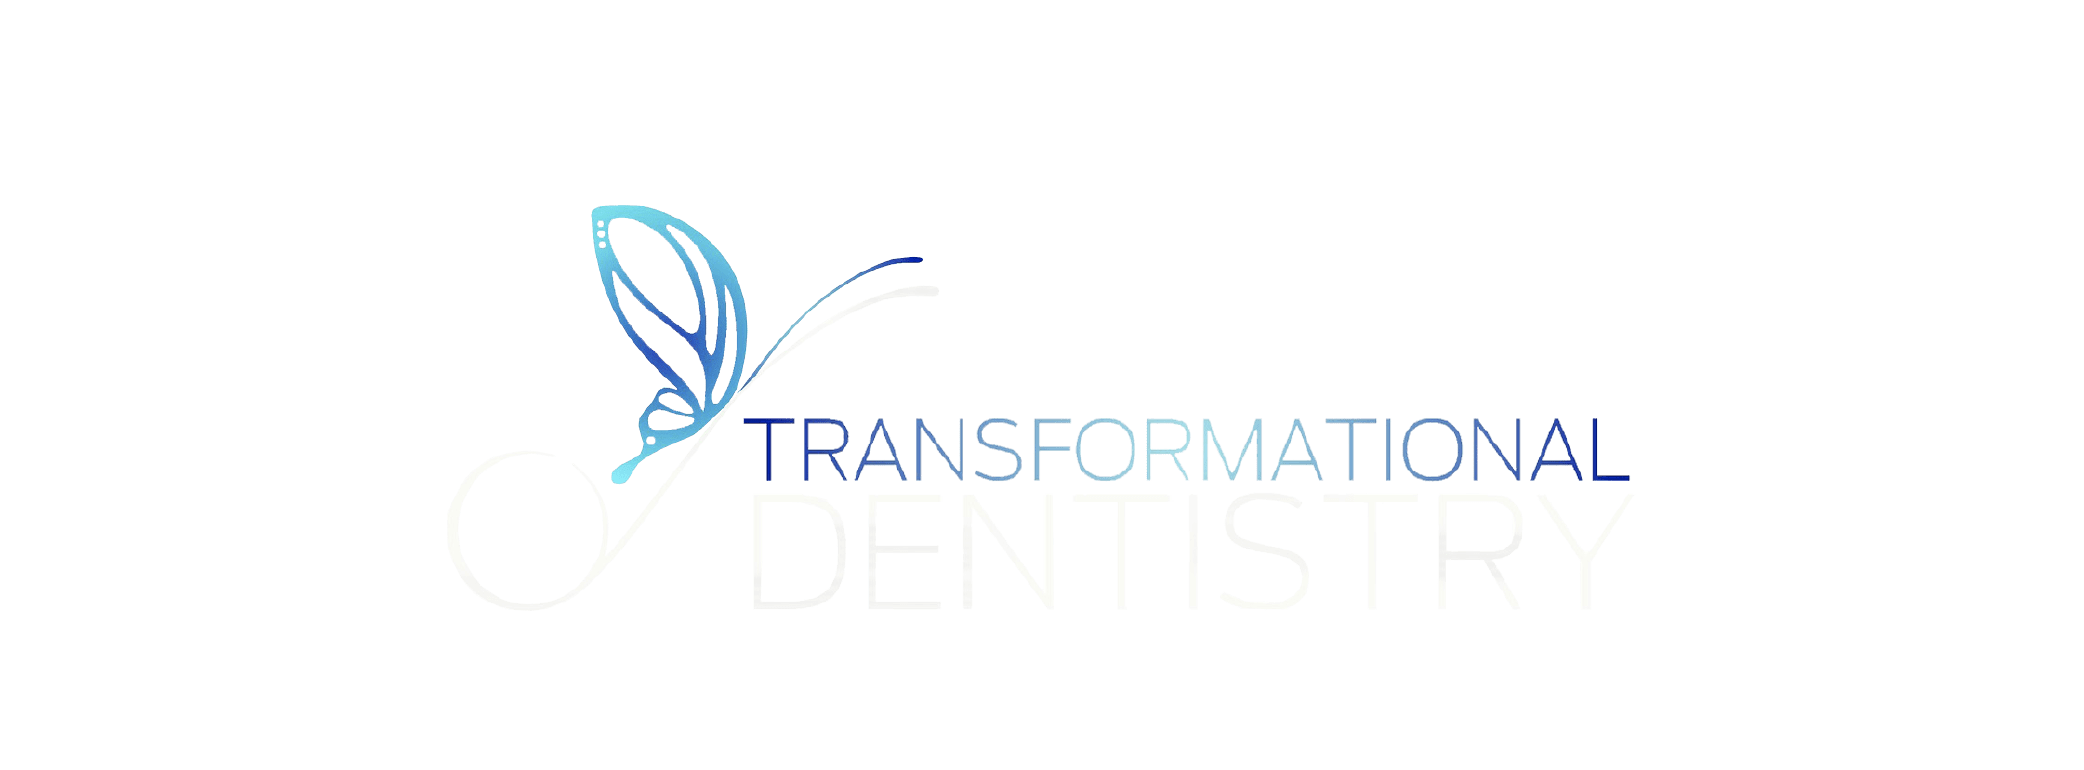 Transformational_Dentistry_Logo_Template_LOGO